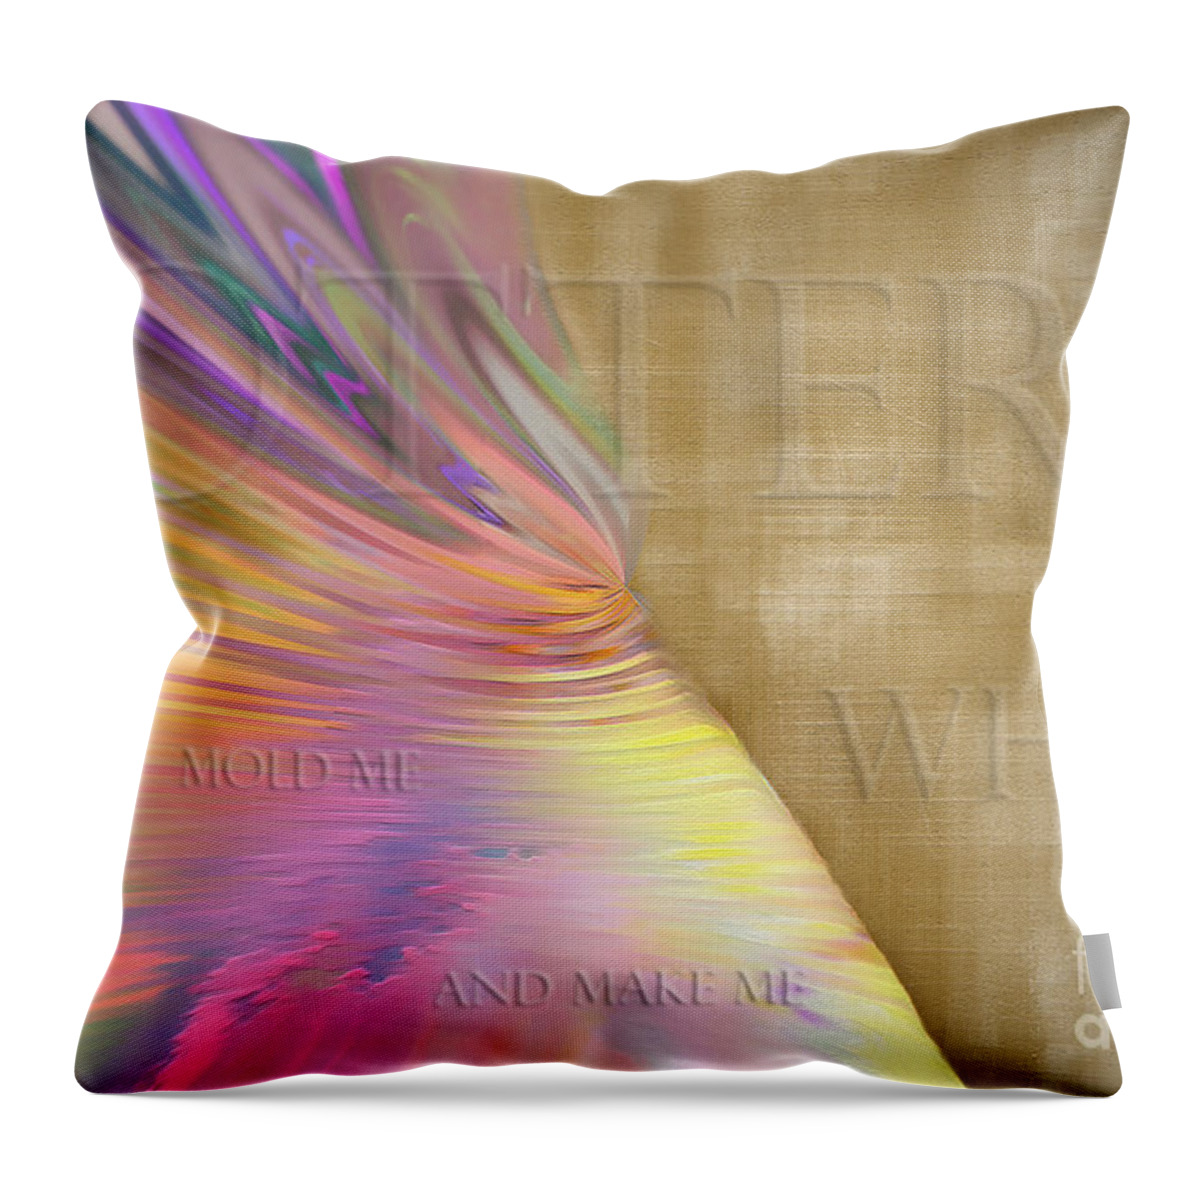 Hotel Art Throw Pillow featuring the digital art Potter's Wheel by Margie Chapman